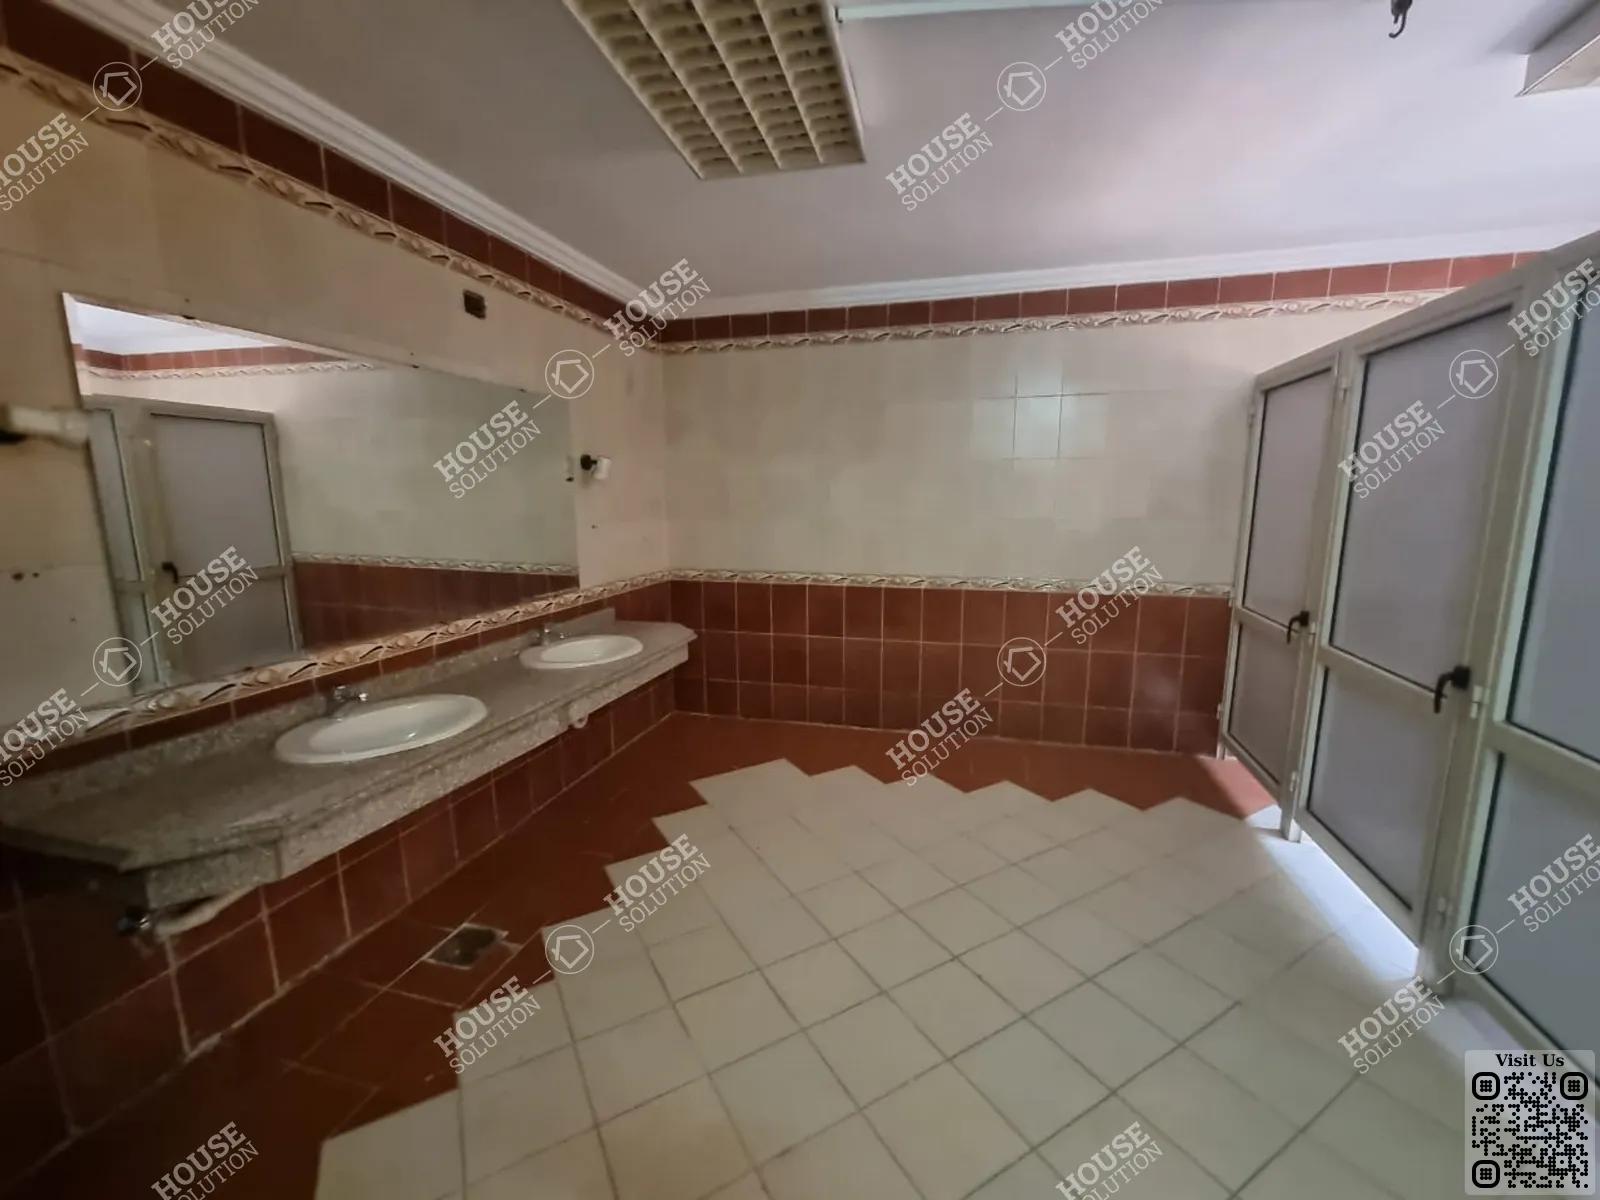 BATHROOM  @ Office spaces For Rent In Maadi Maadi Sarayat Area: 700 m² consists of 8 Bedrooms 2 Bathrooms Semi furnished 5 stars #5074-1